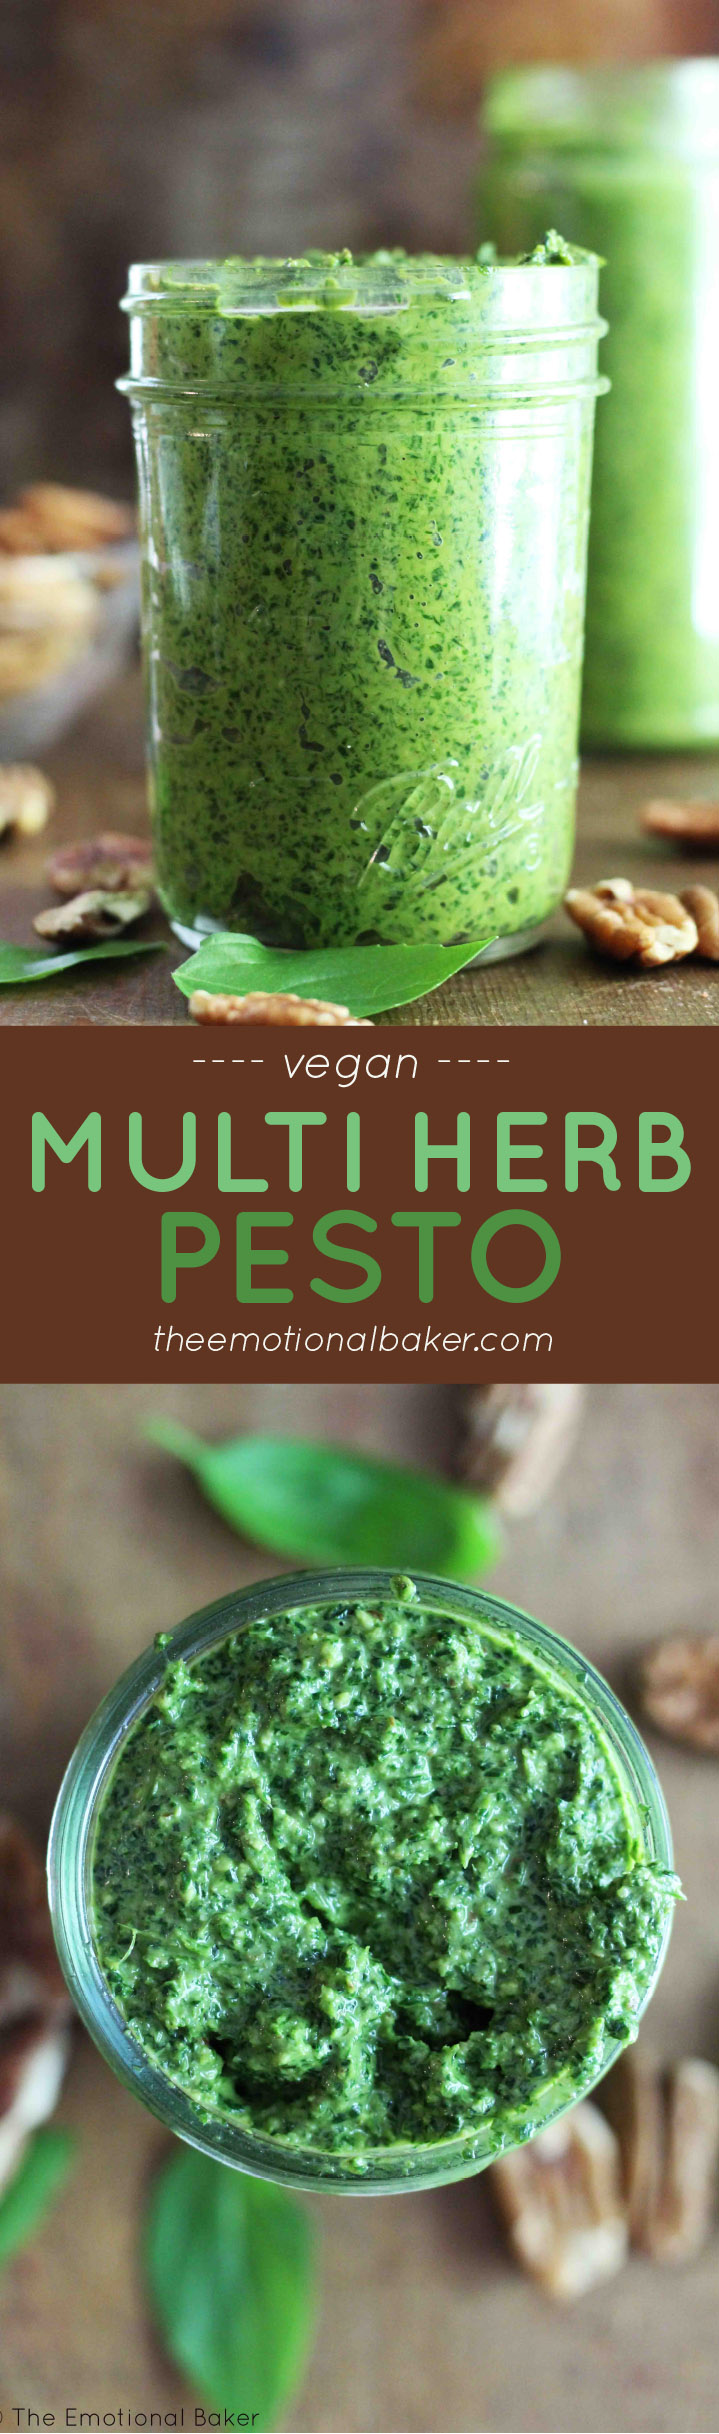 Multi Herb Pesto